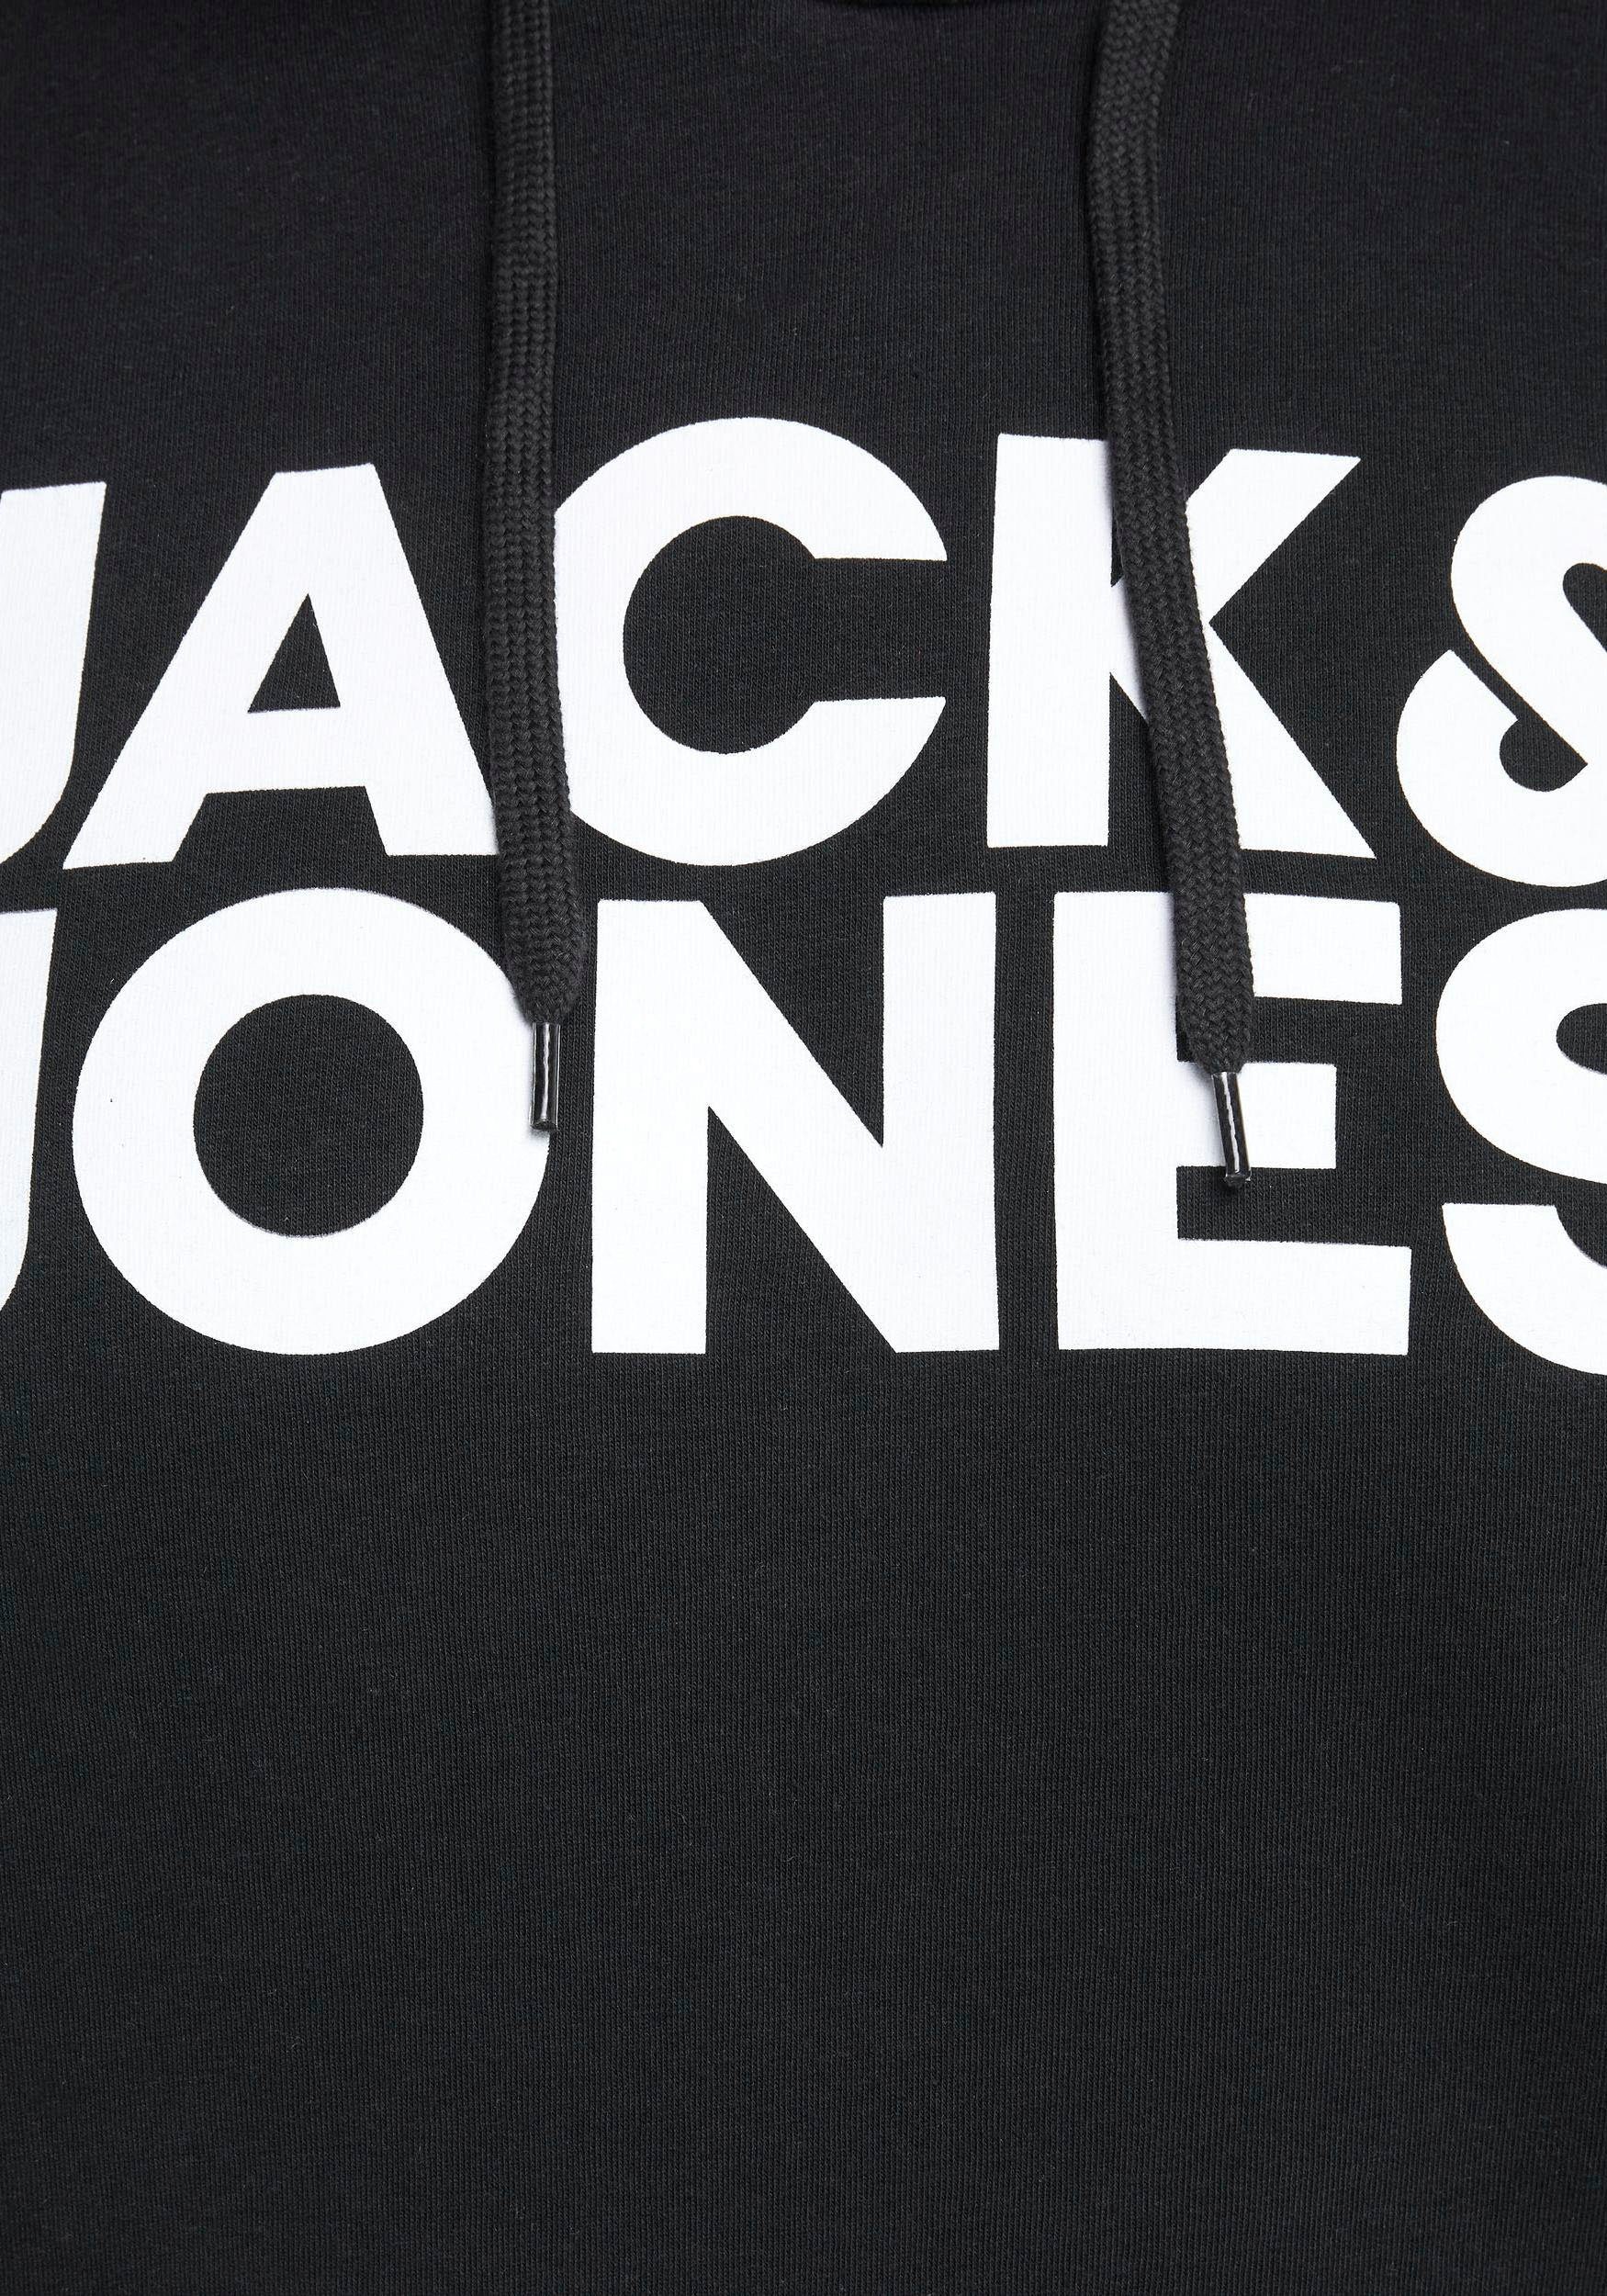 Jack & Jones PlusSize LOGO Bis HOOD schwarz Kapuzensweatshirt 6XL CORP SWEAT Größe